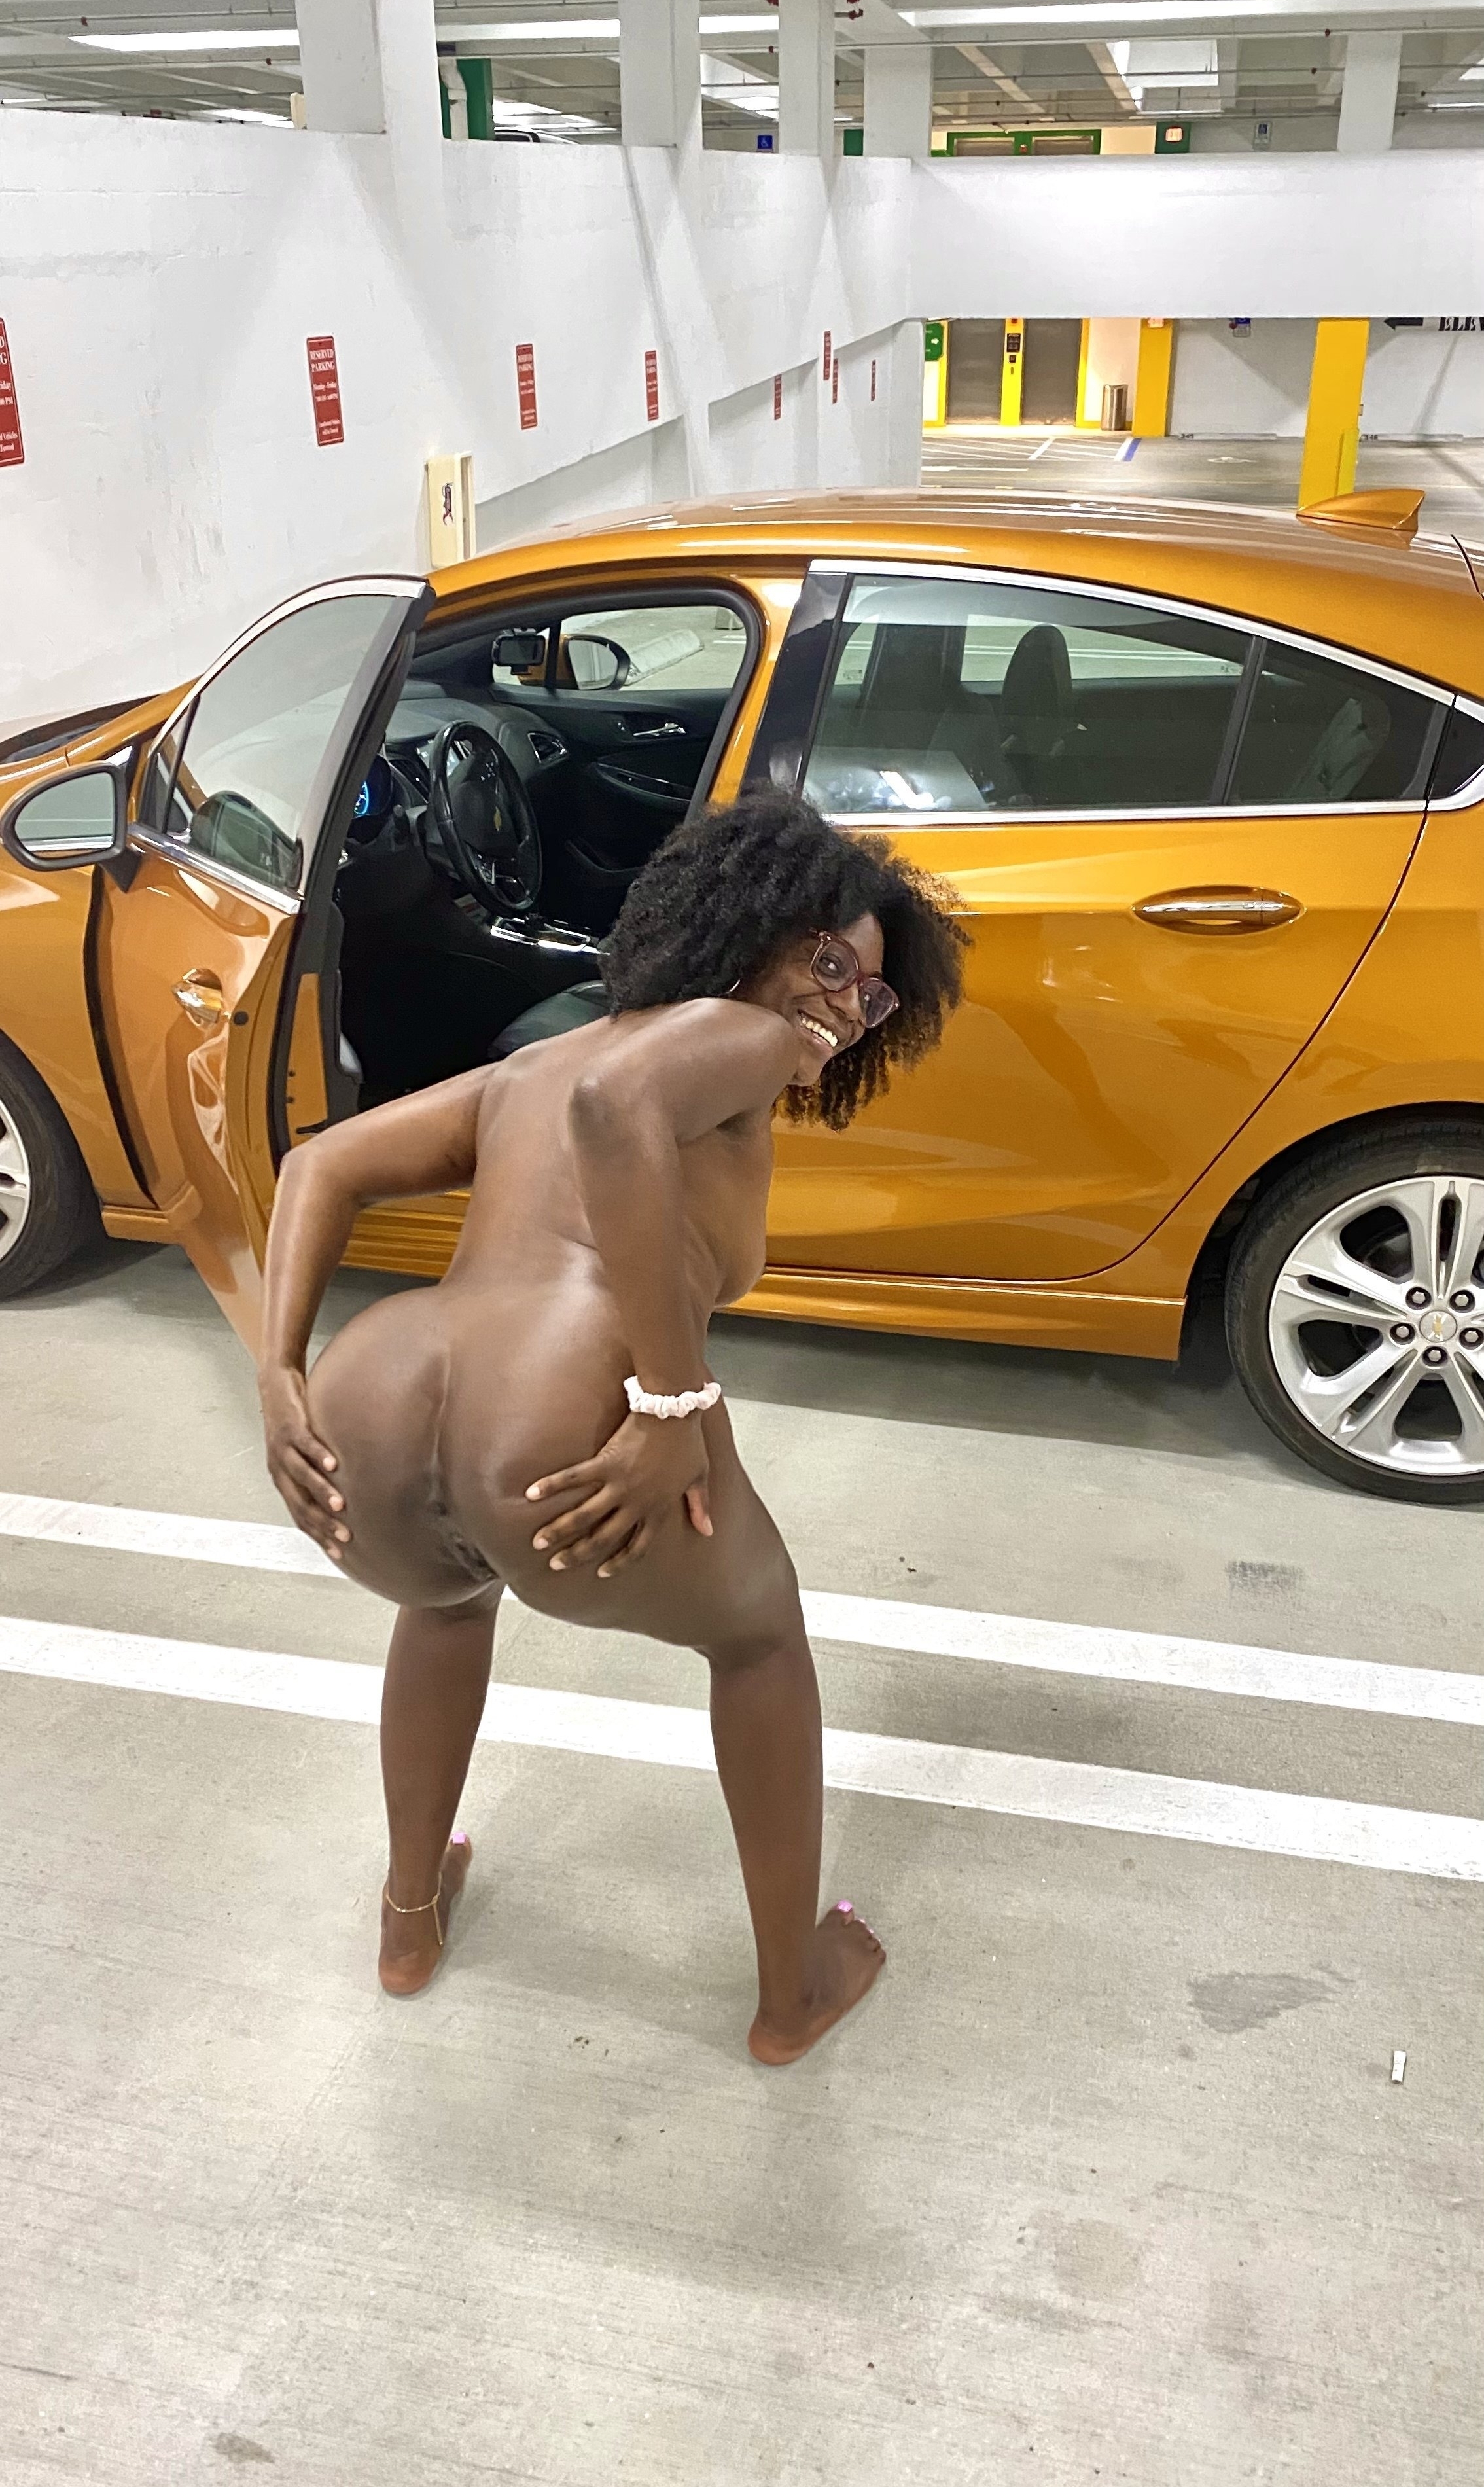 Butt naked in public